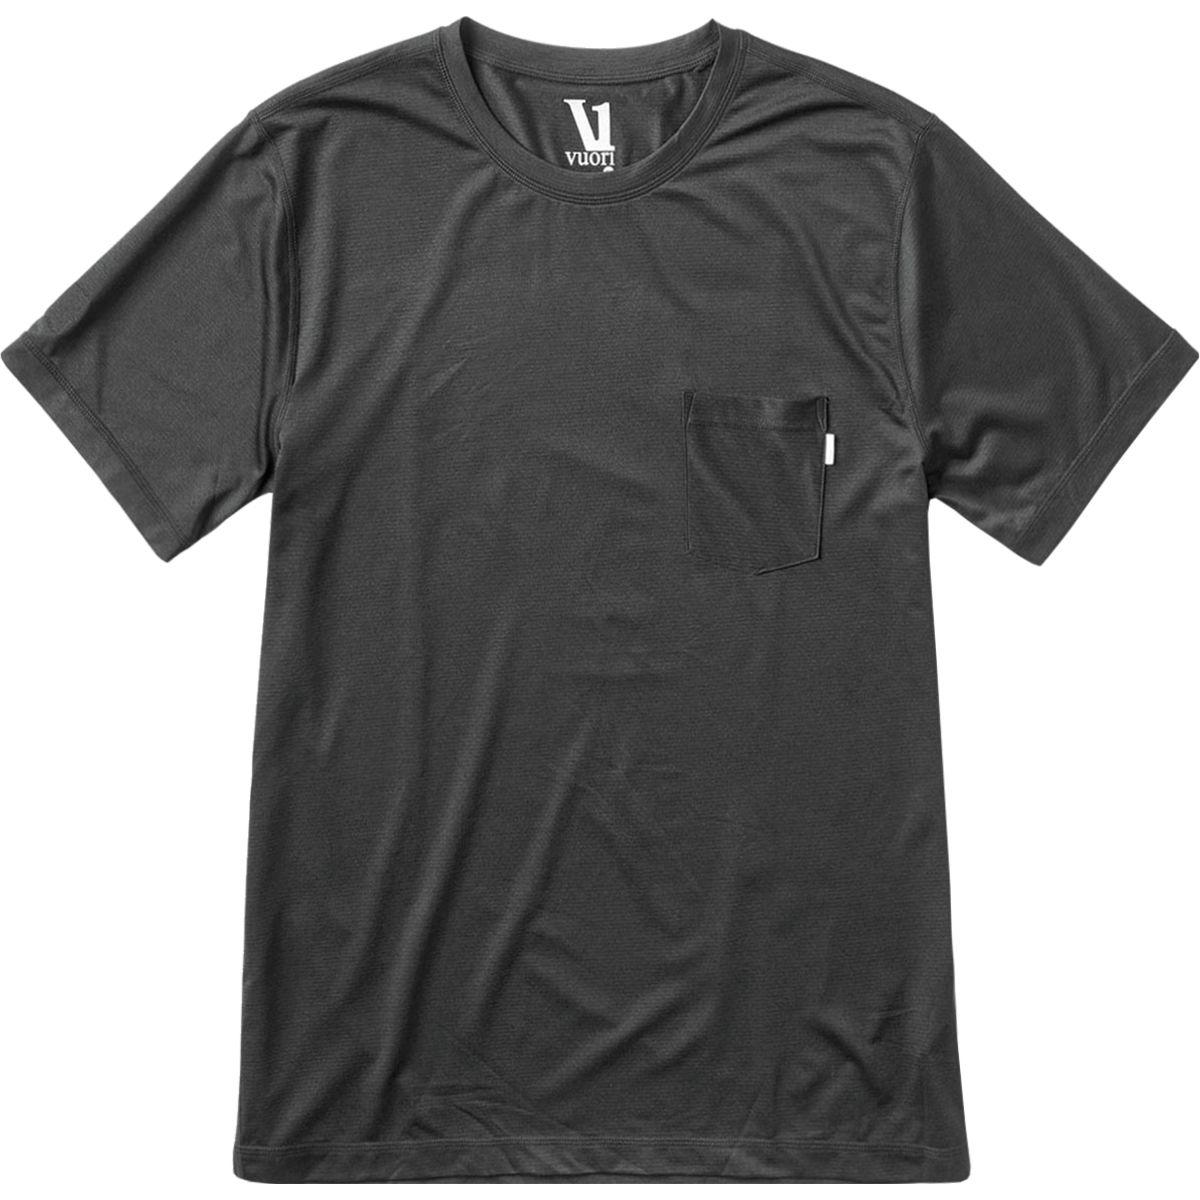 Vuori Synthetic Tradewind Performance T-shirt in Black for Men - Lyst